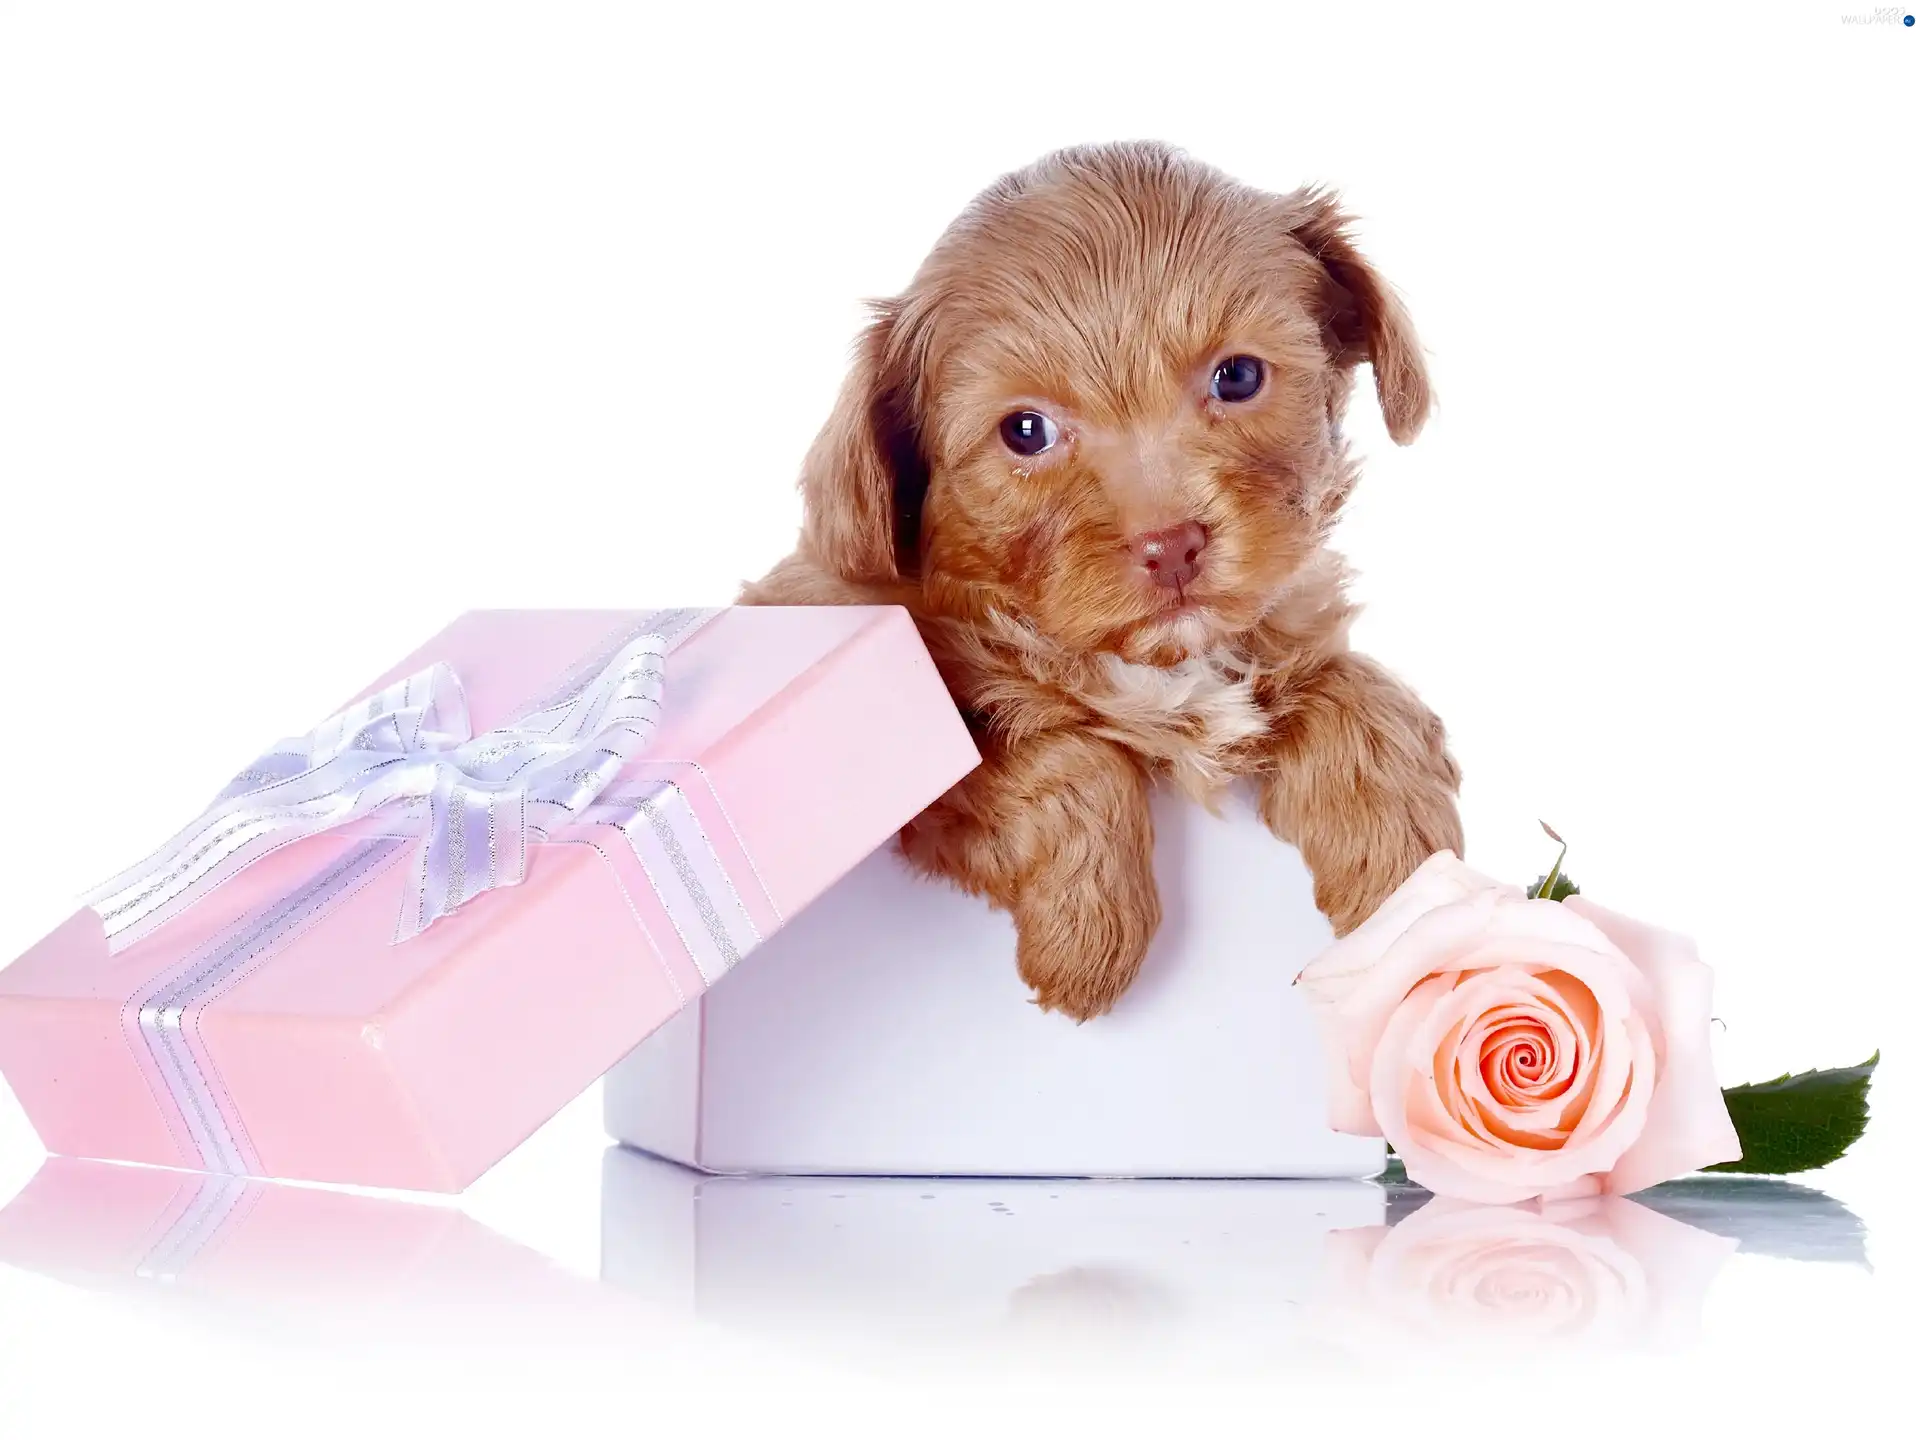 sweet, Present, dog, Bichon frise, Puppy